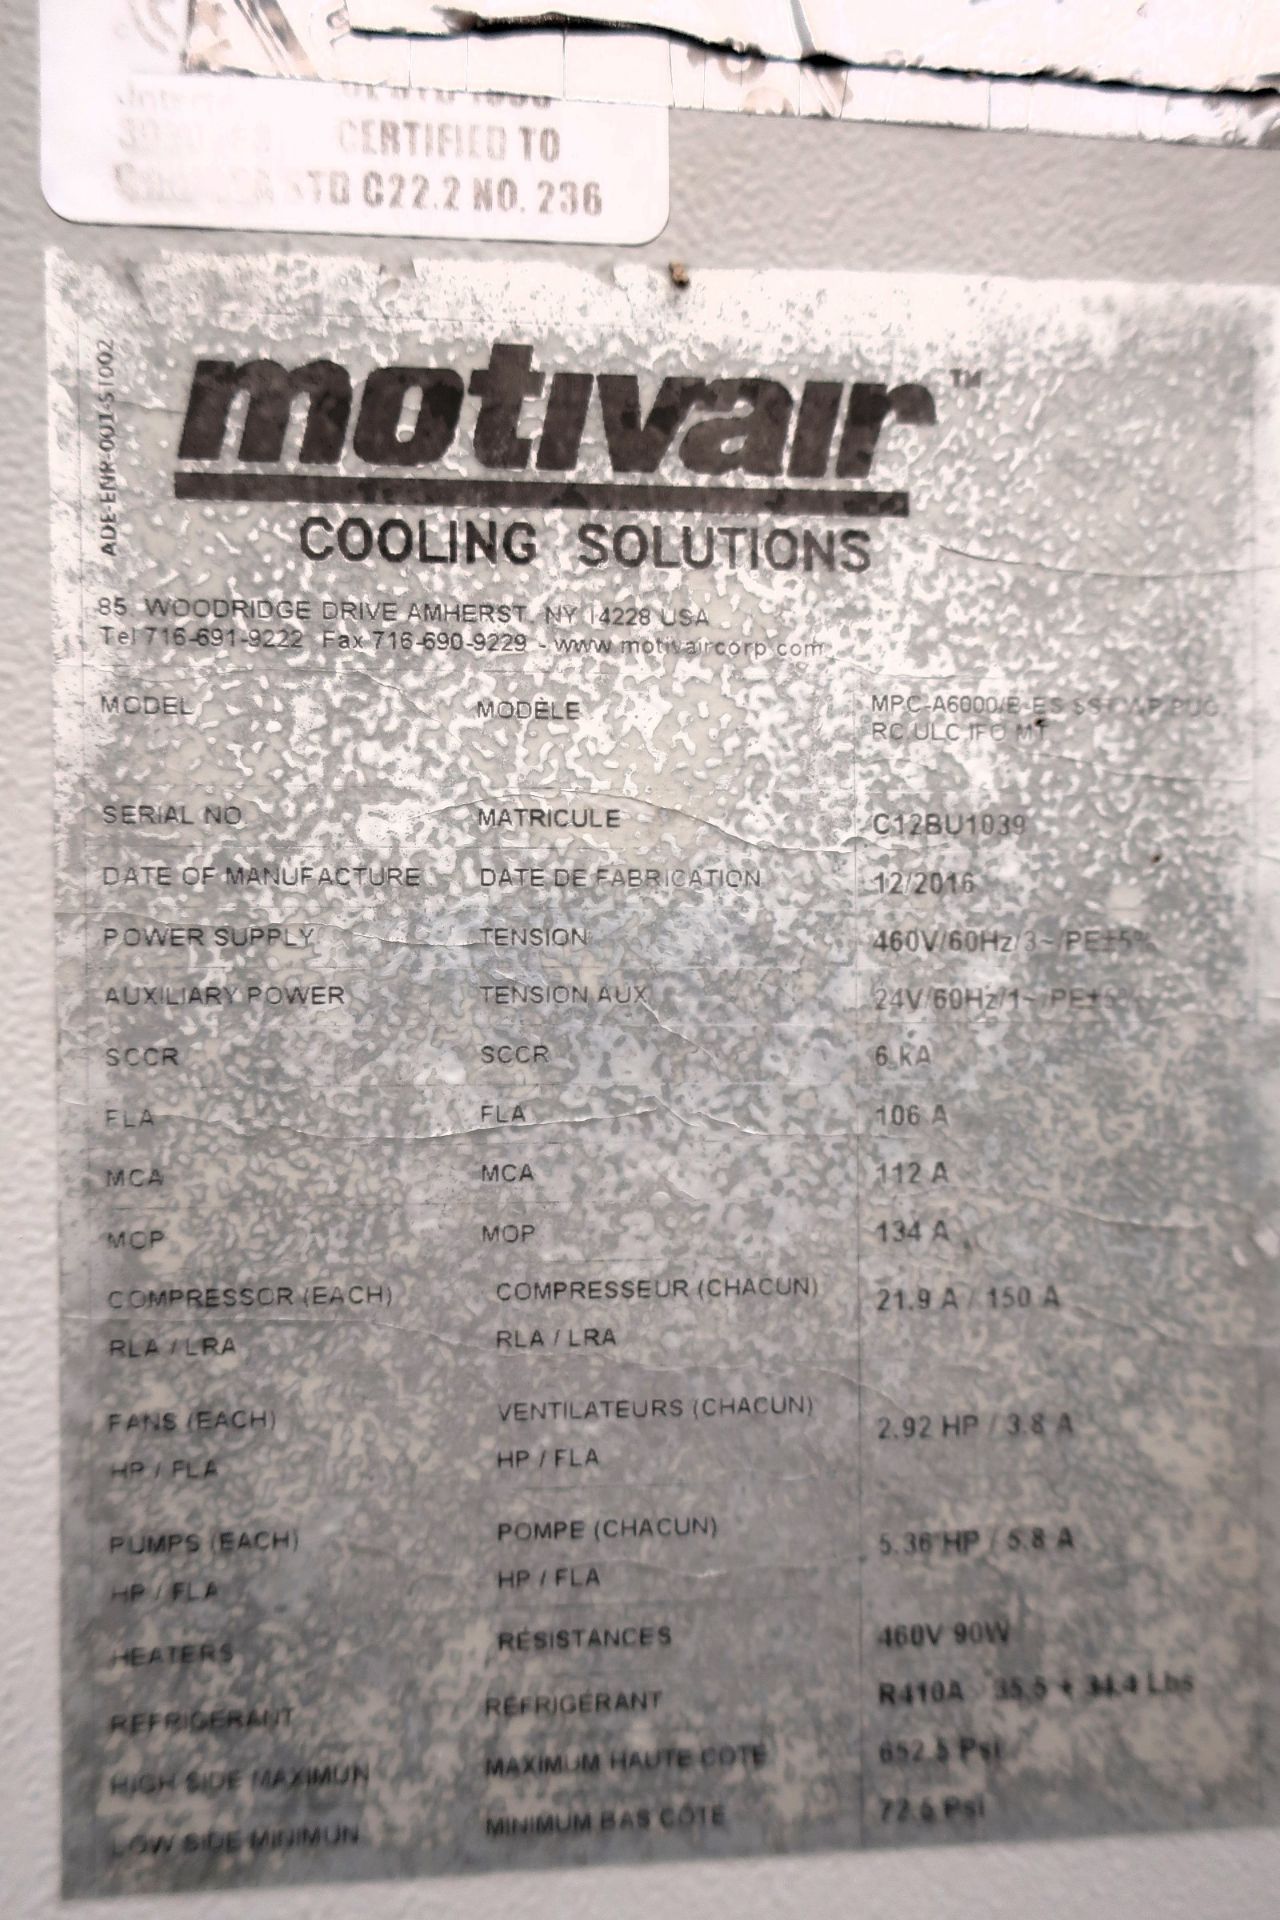 2016 Motivair MPC-A 6000 Air Cooled 44.5 Ton Chiller, SN C12BU1039 - Image 3 of 3